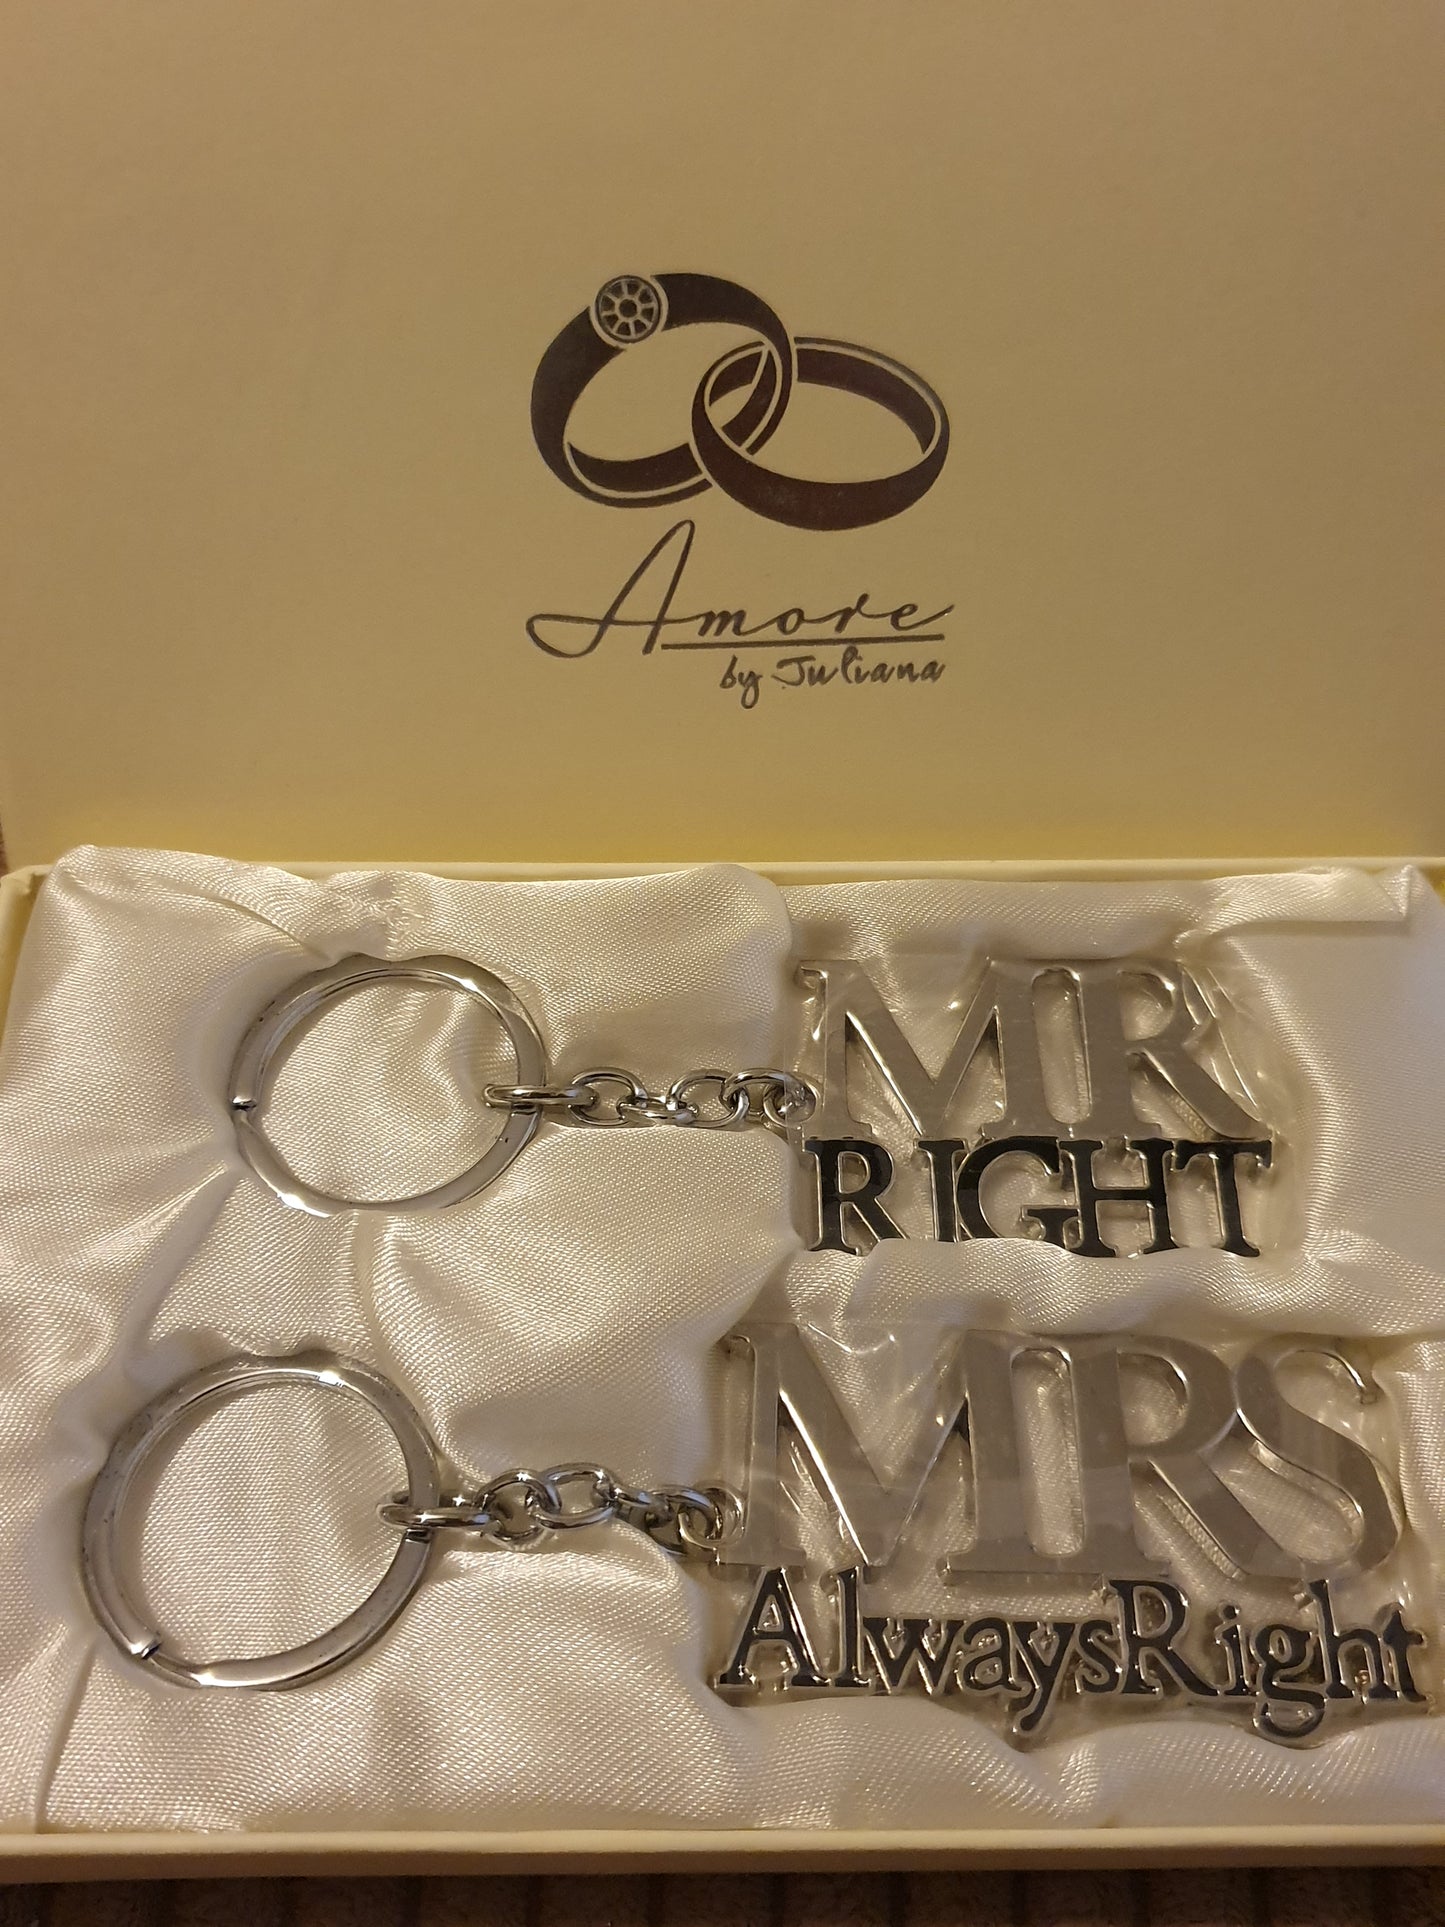 'Mr Right & Mrs Always Right' Dual Keyring Set